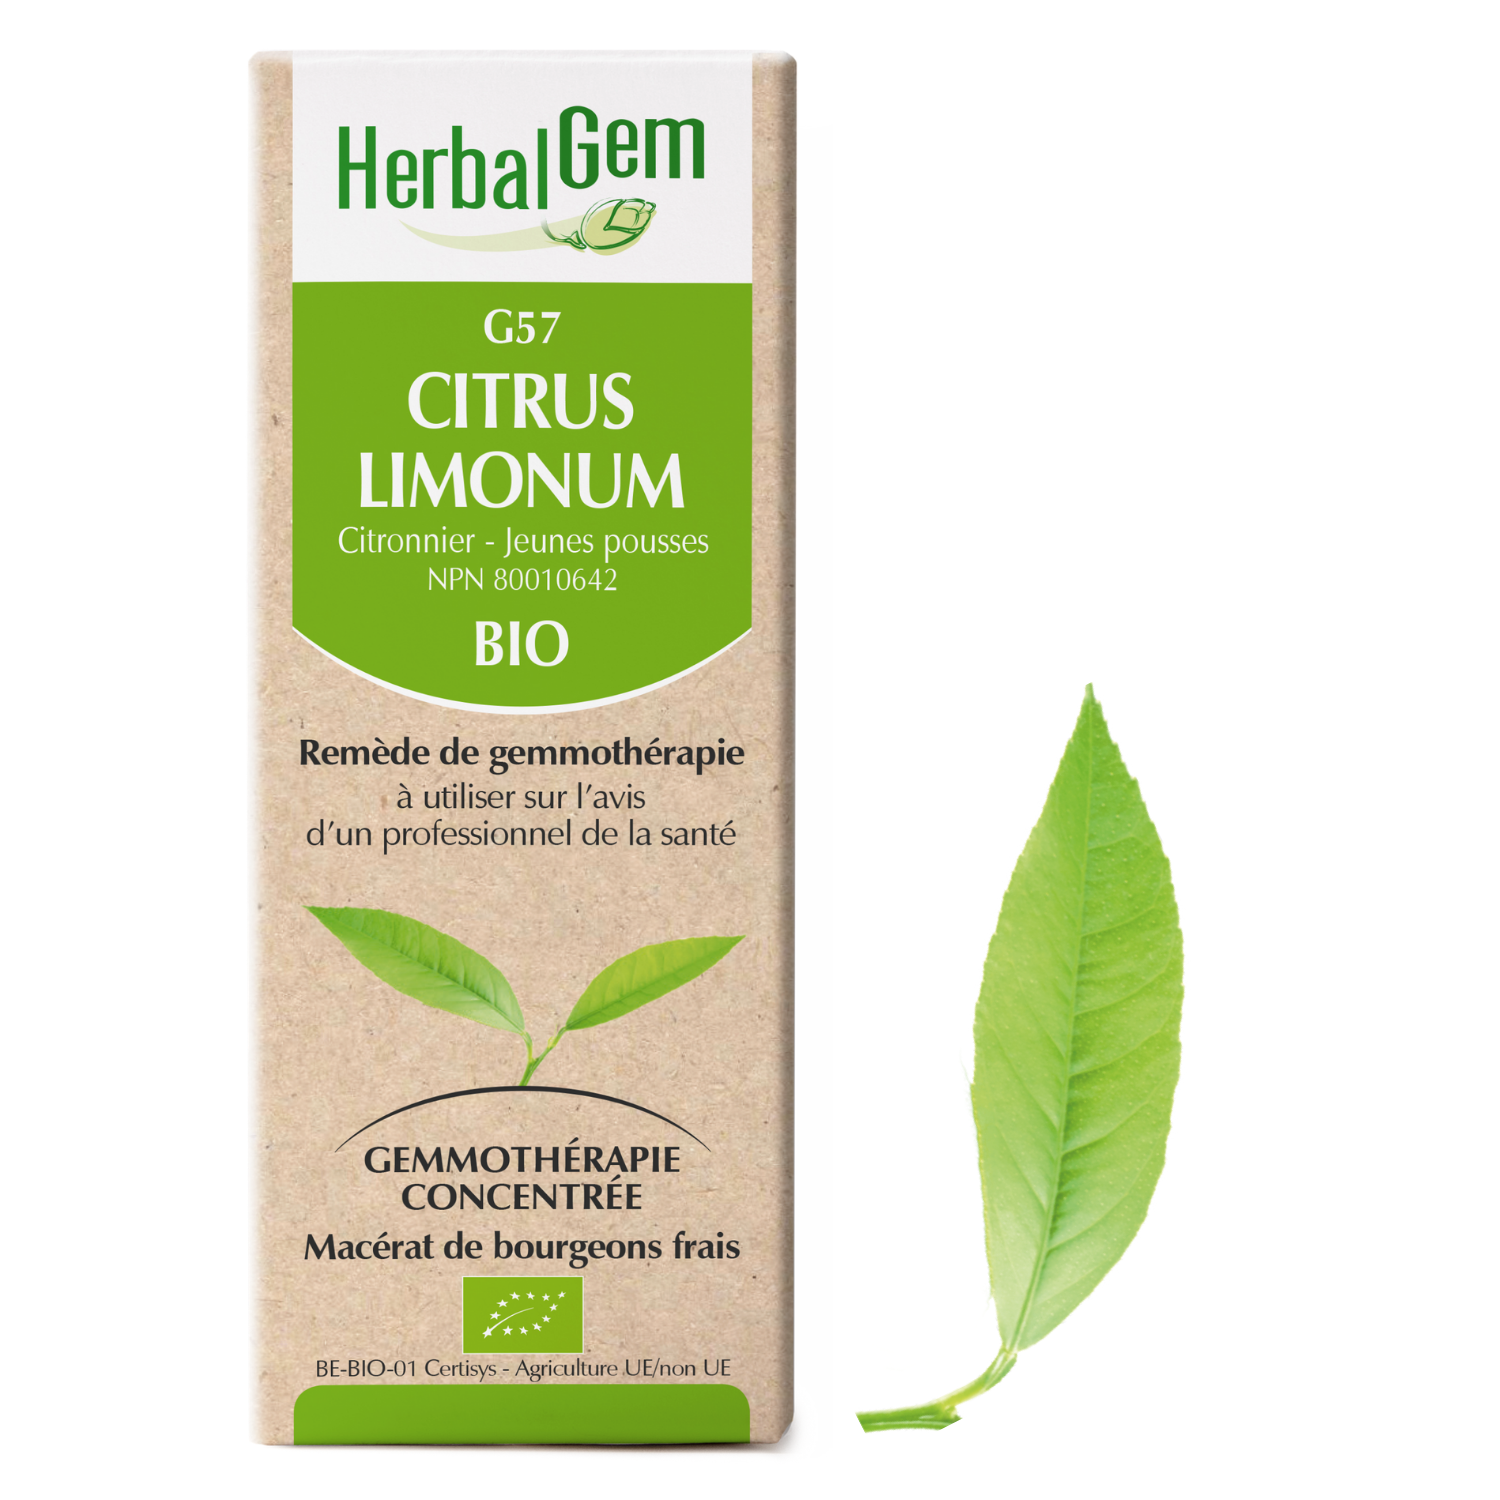 Citrus limonum (Lemon) G57